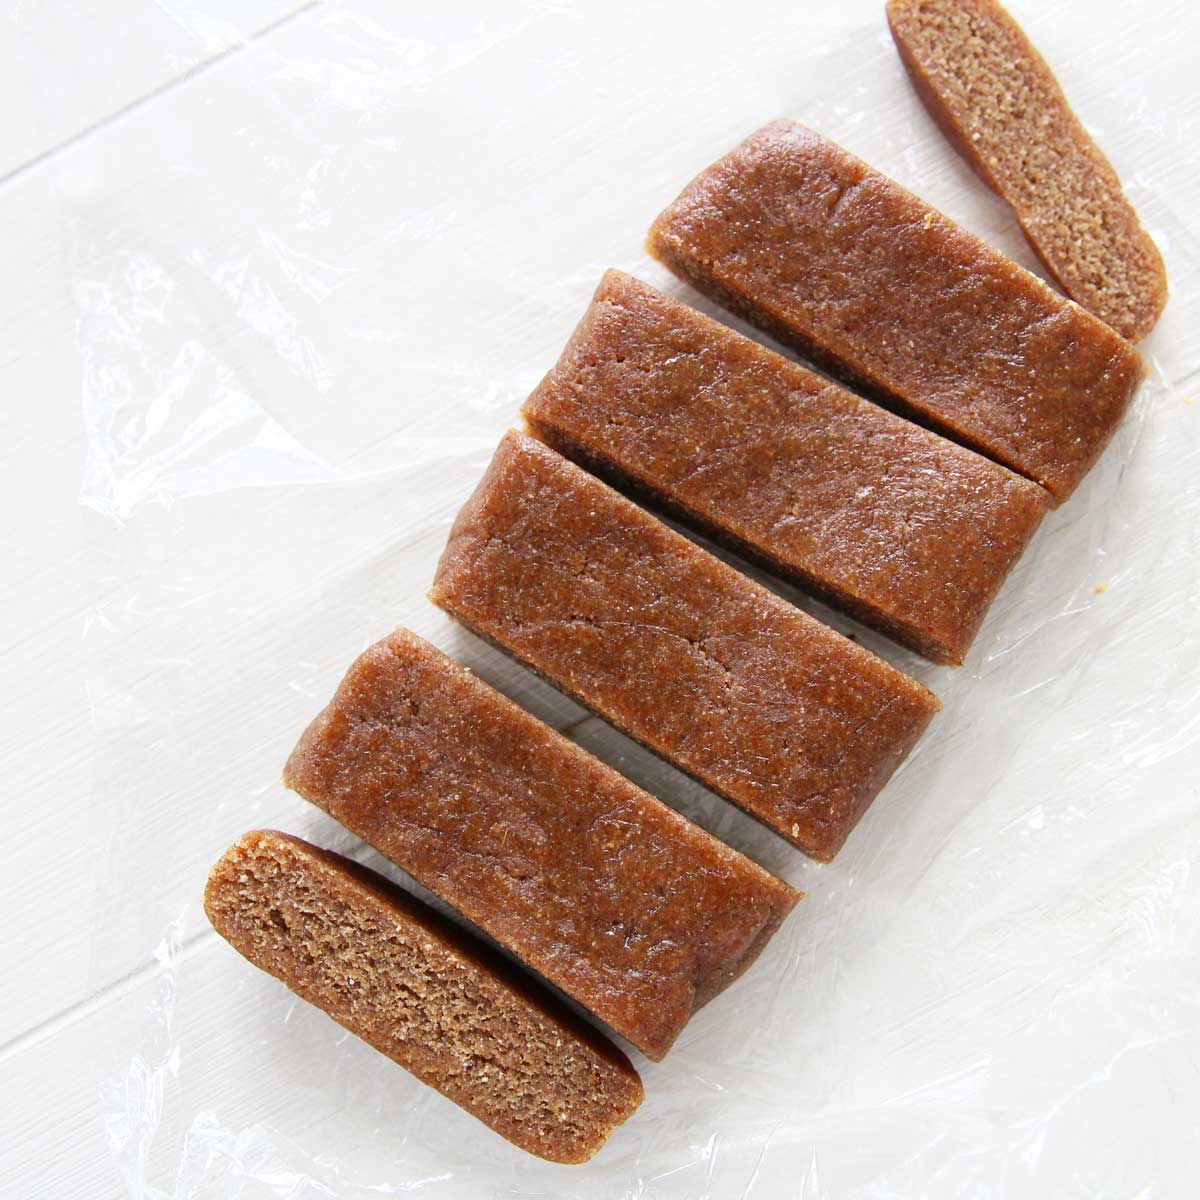 Gingerbread Collagen Protein Bars: a Healthier Festive Snack - Gingerbread Collagen Protein Bars